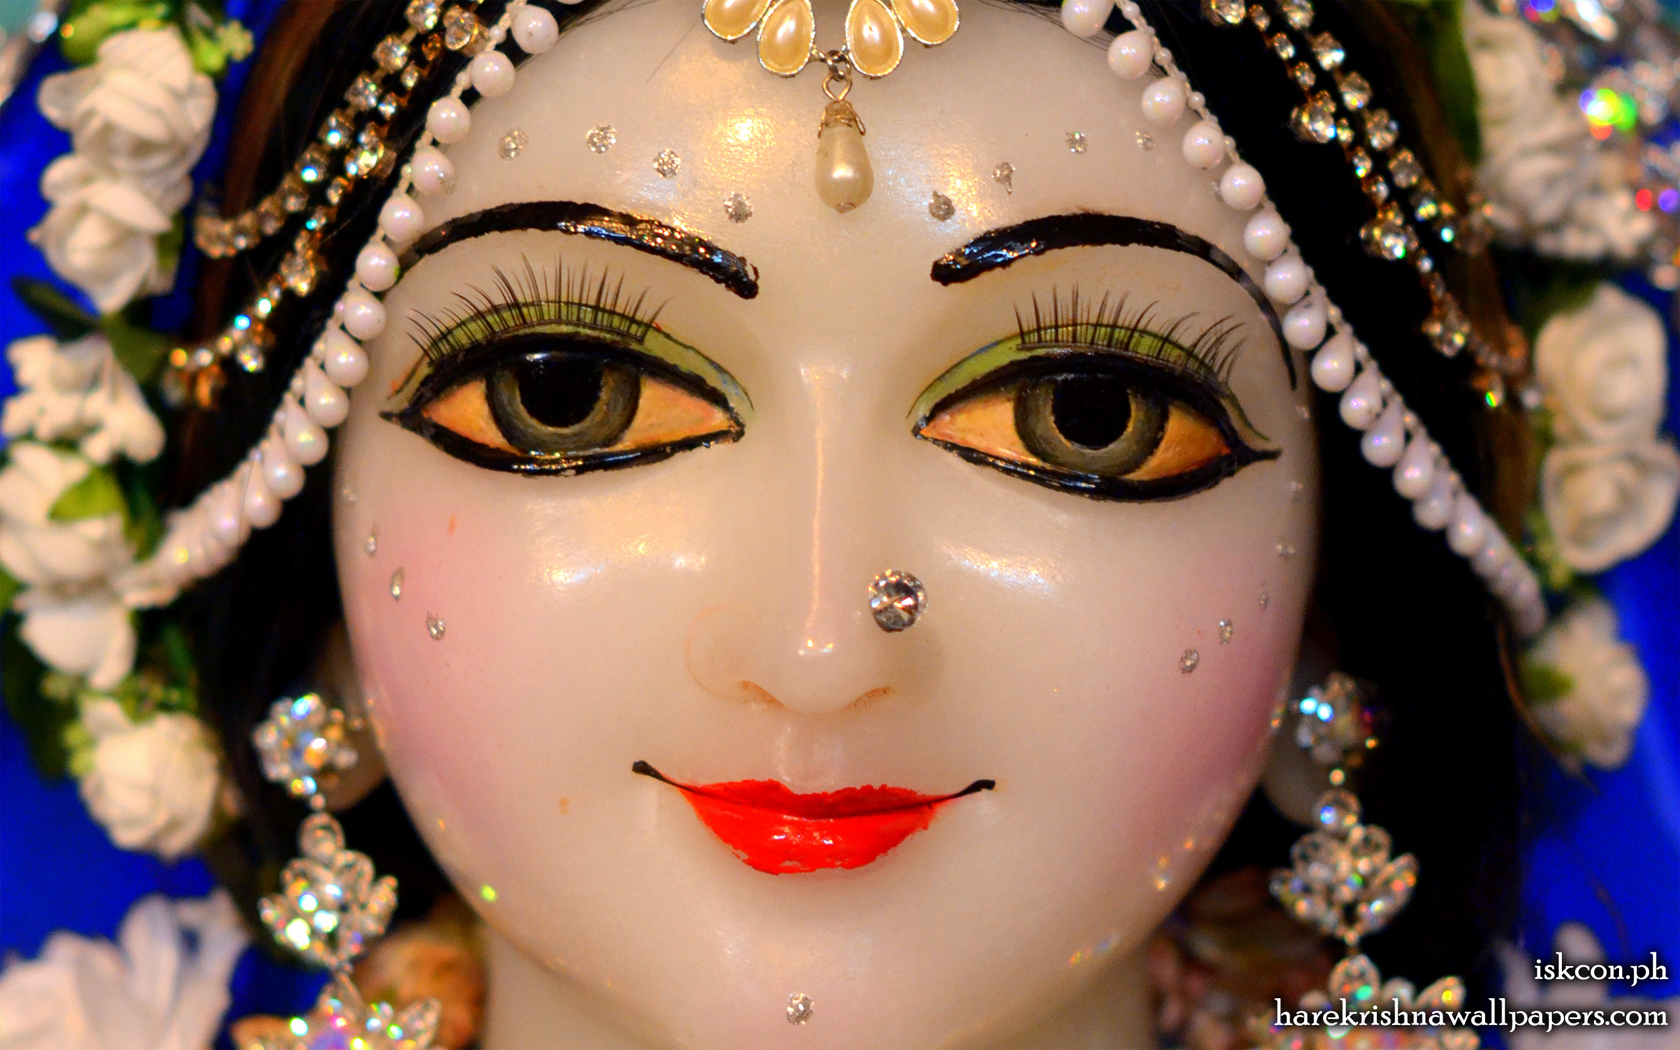 Sri Radha Close up Wallpaper (002) Size 1680x1050 Download